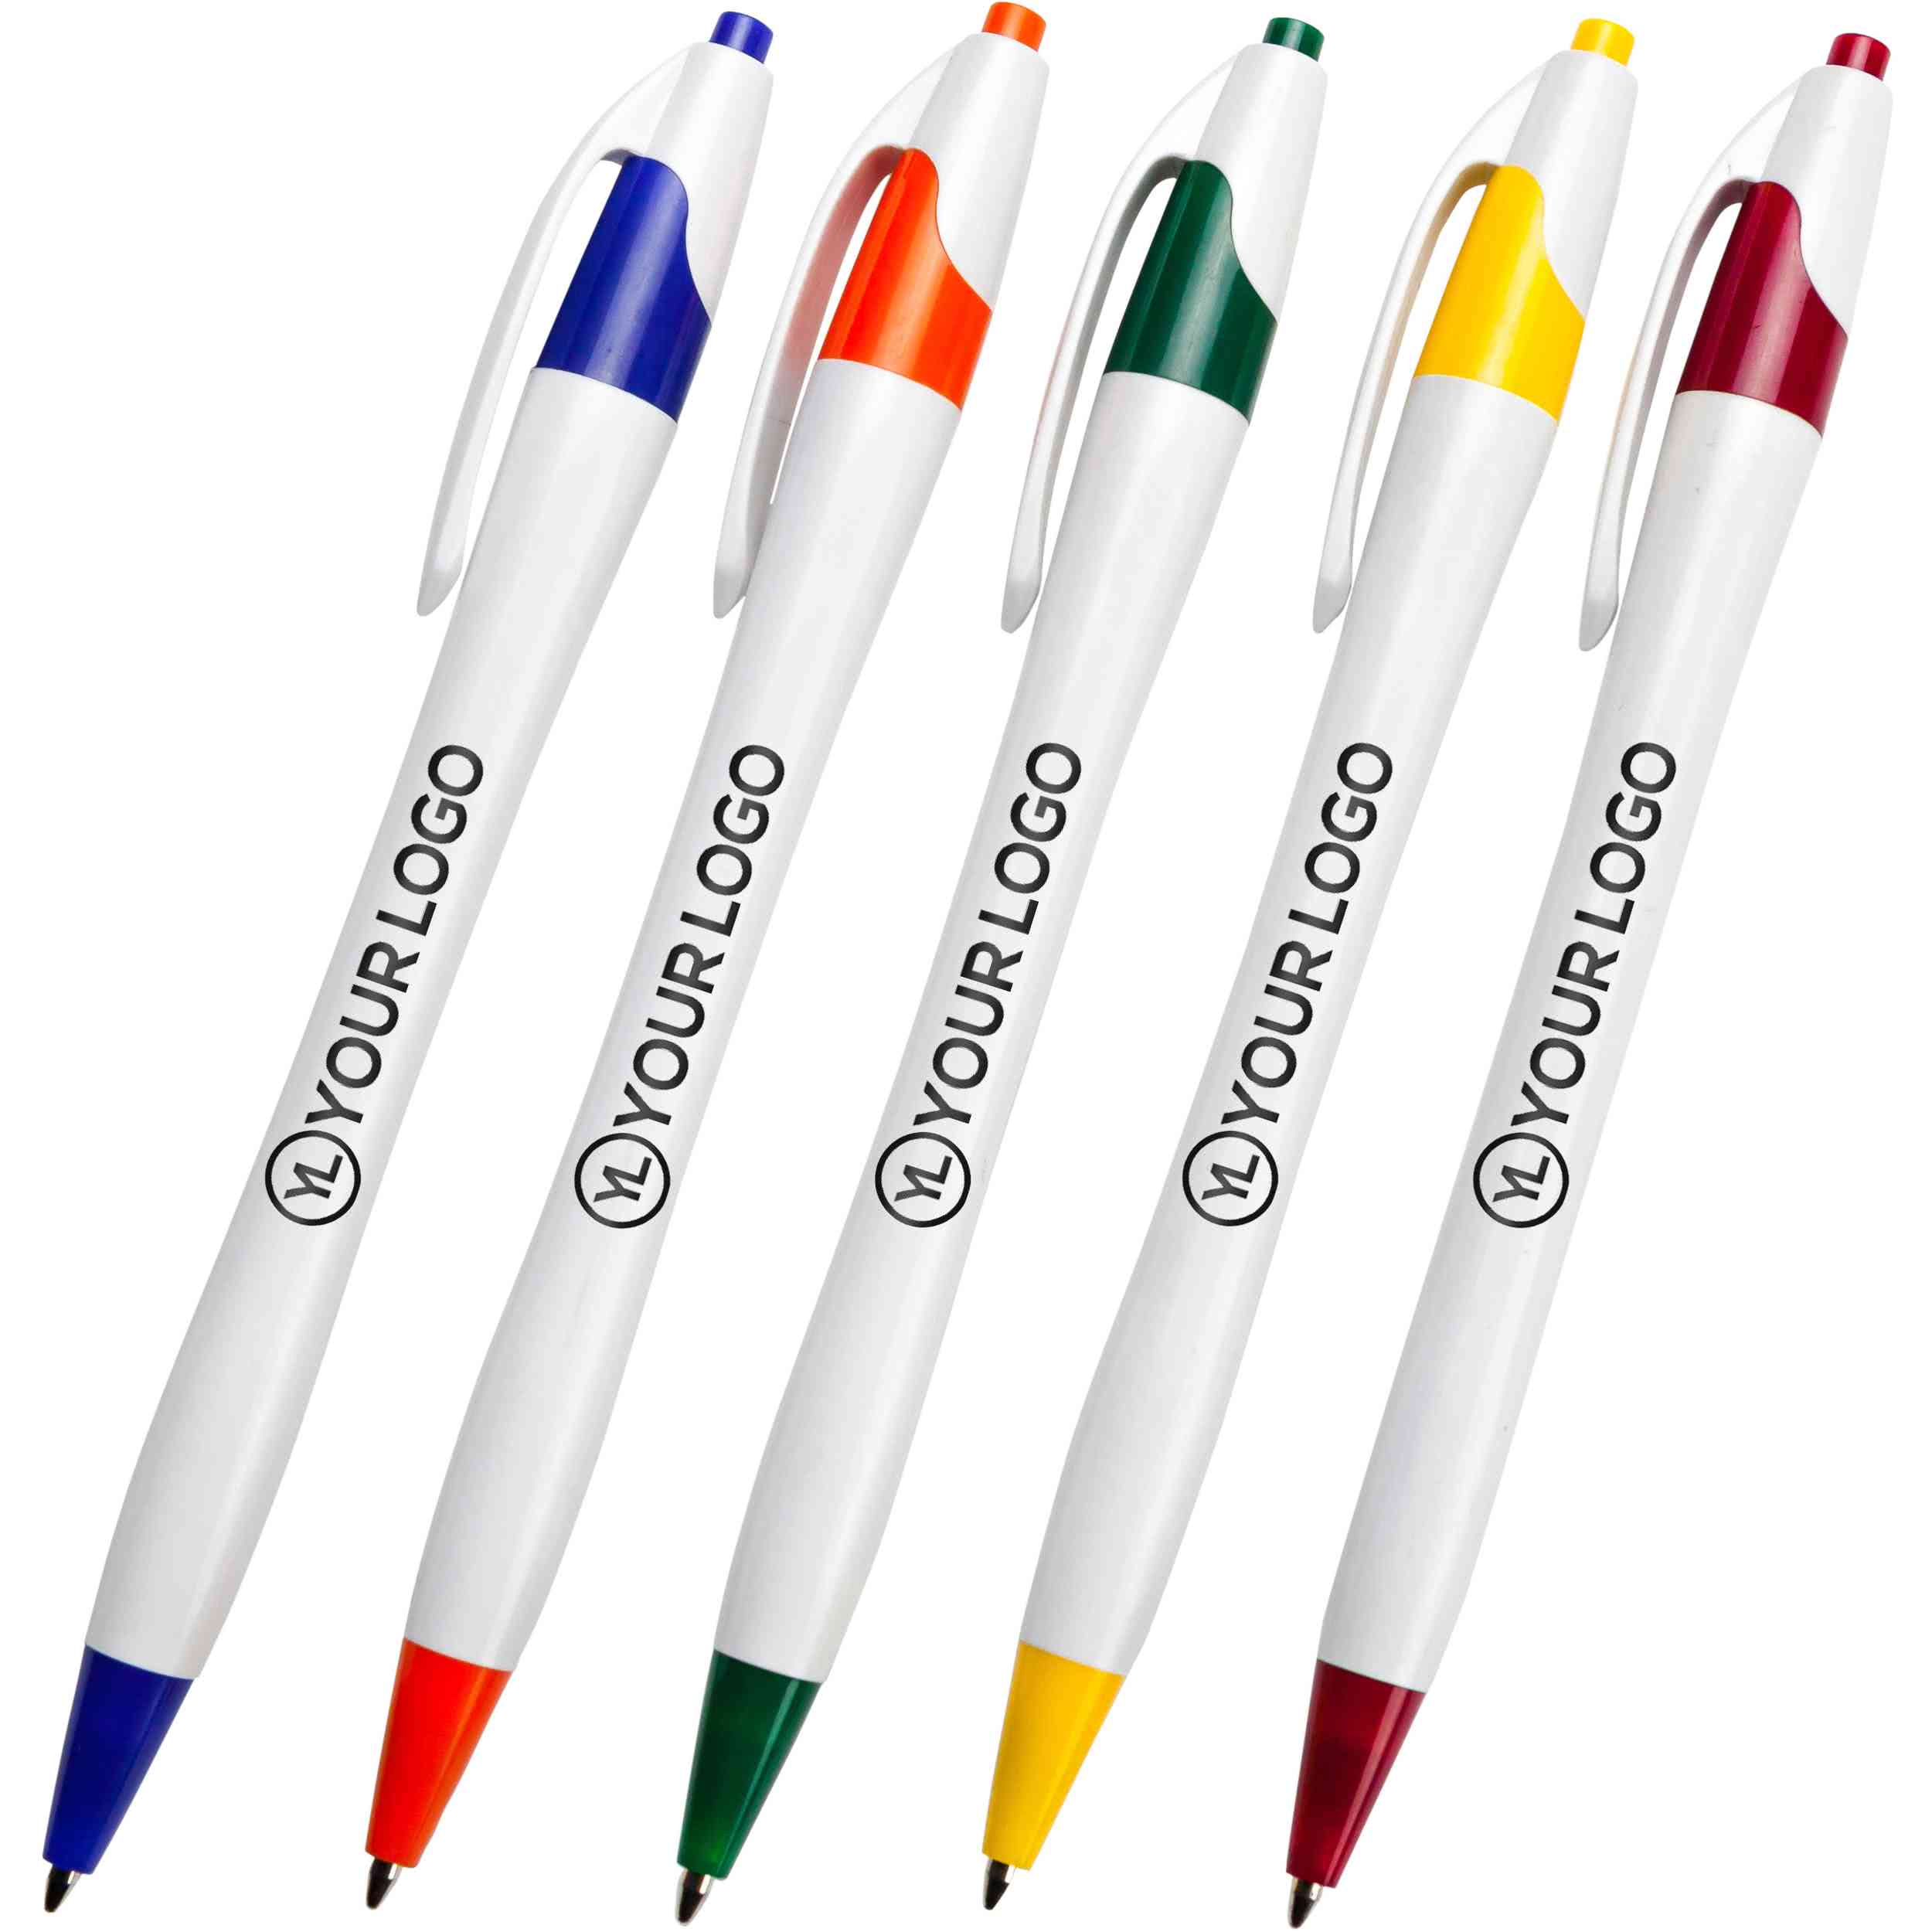 Pen Logo - Promotional Dart Pens with Custom Logo for $0.243 Ea